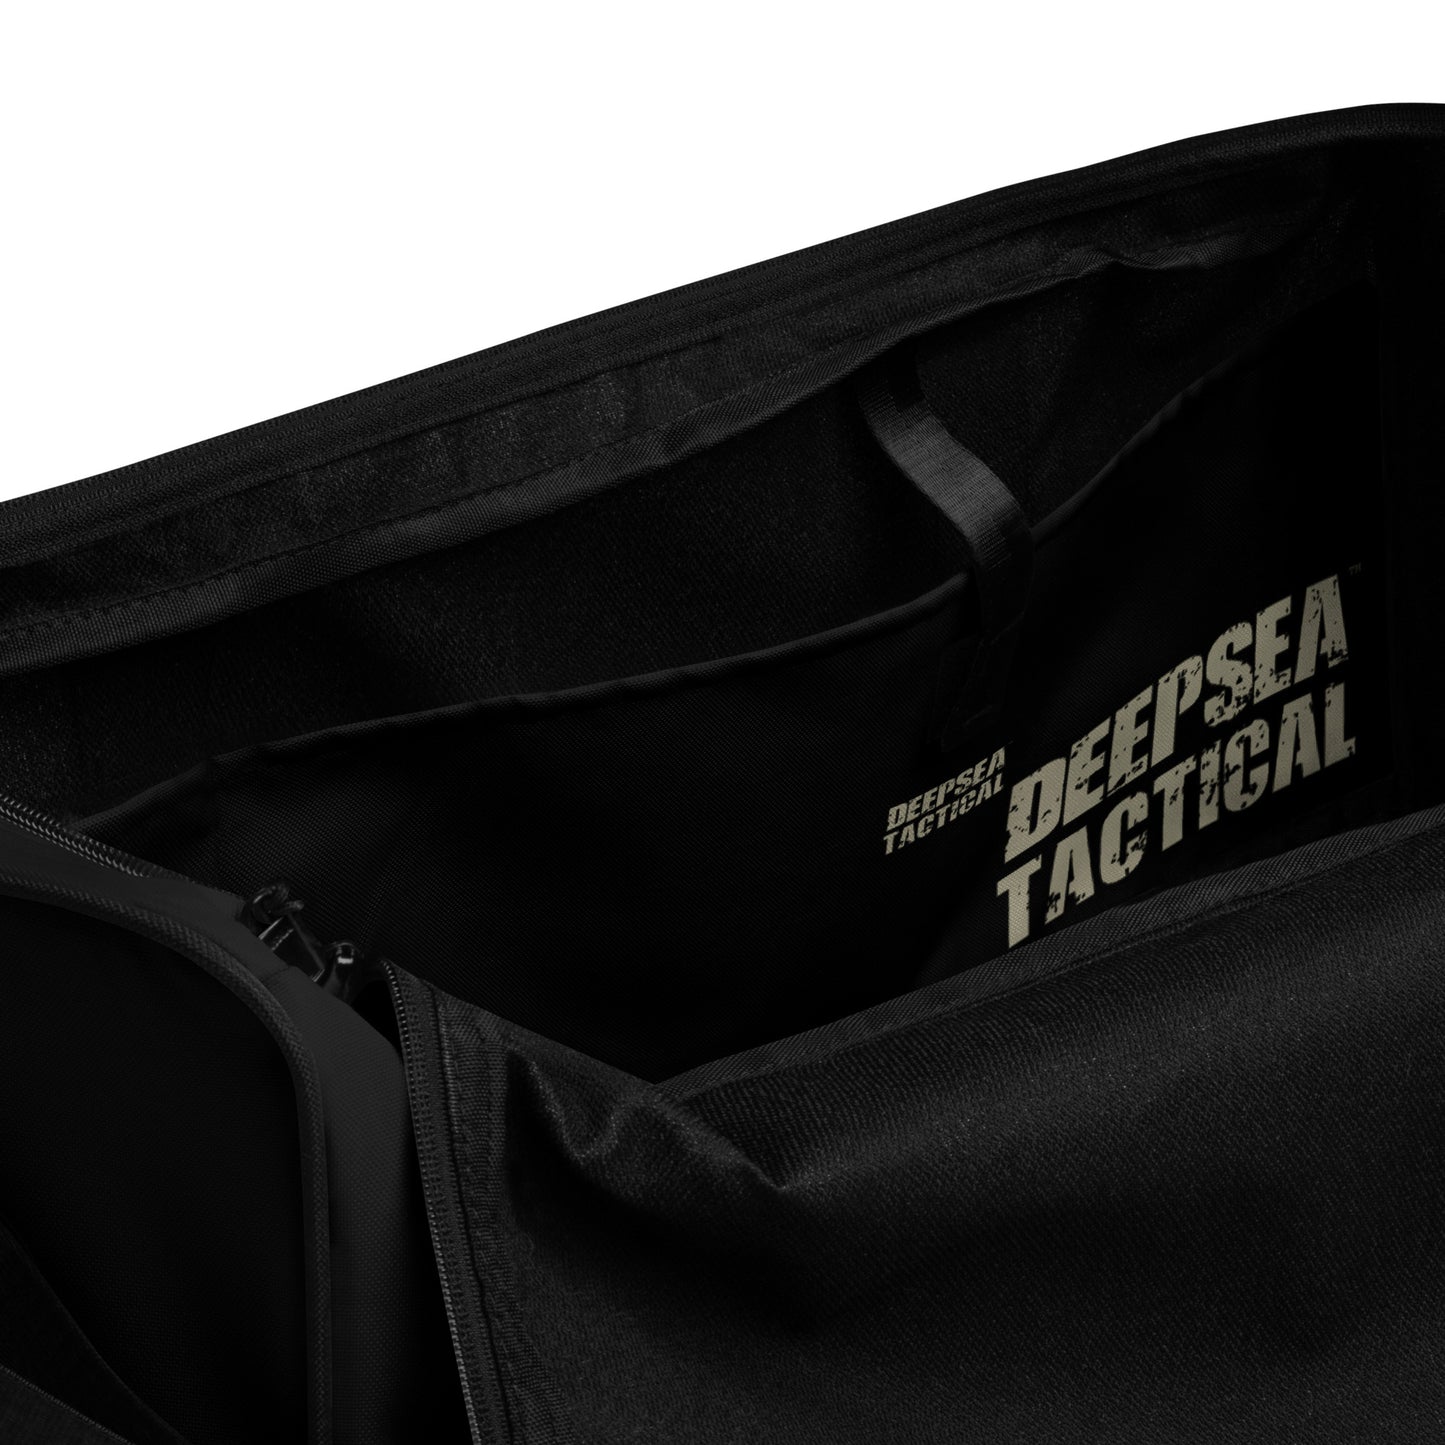 DeepSea Tactical GO bag